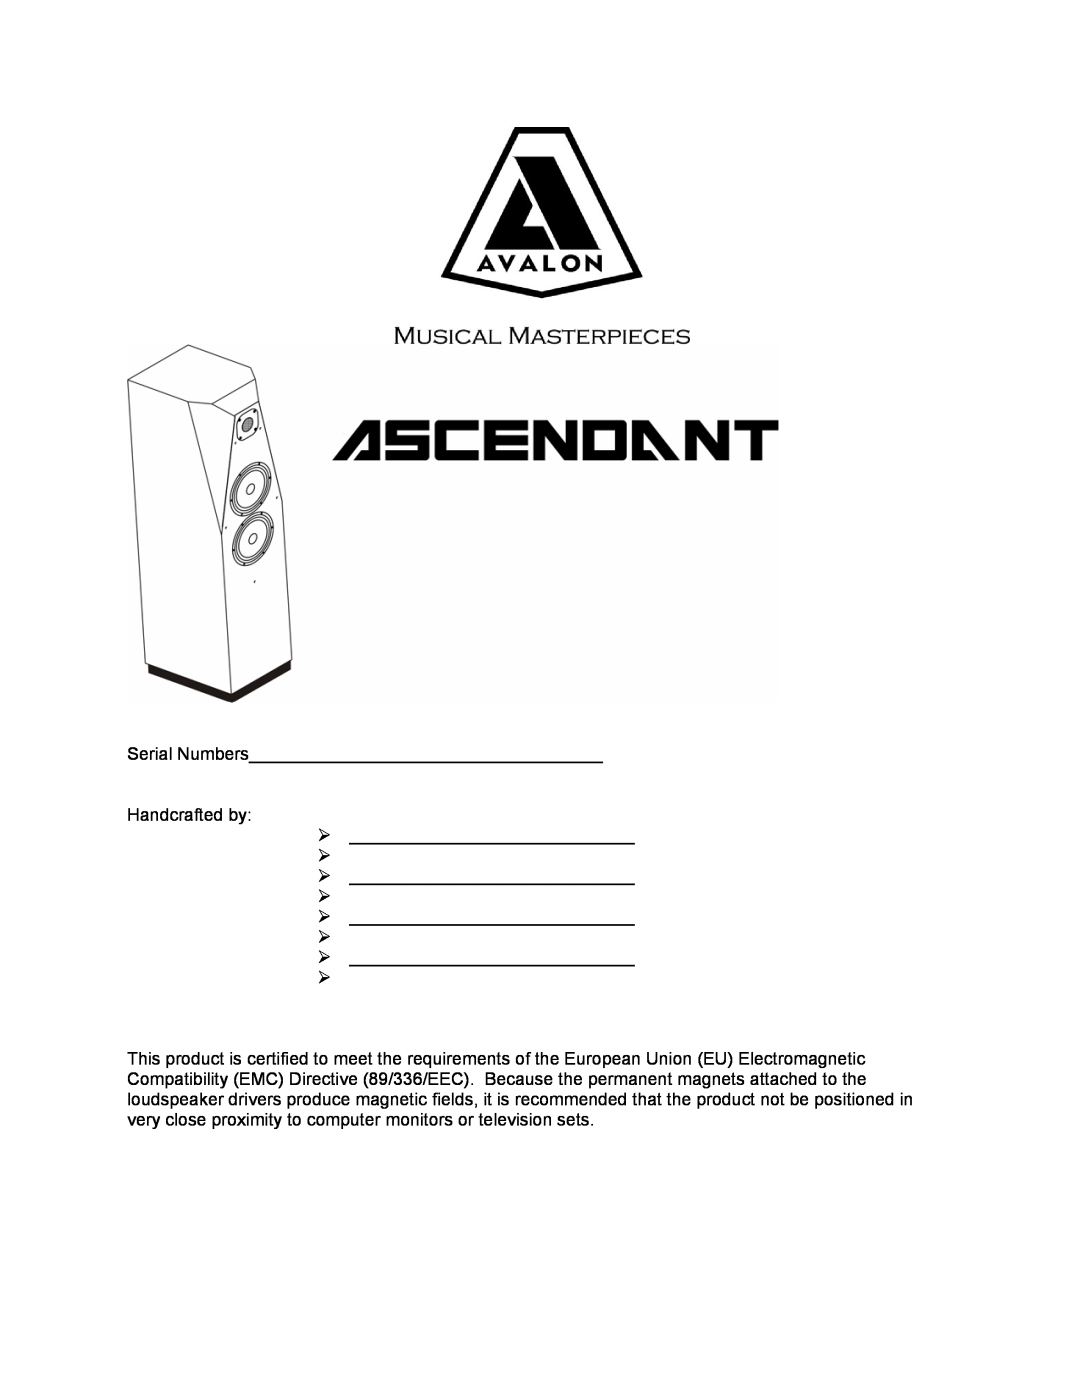 Avalon Acoustics AVALON ASCENDANT manual Handcrafted by ¾ 